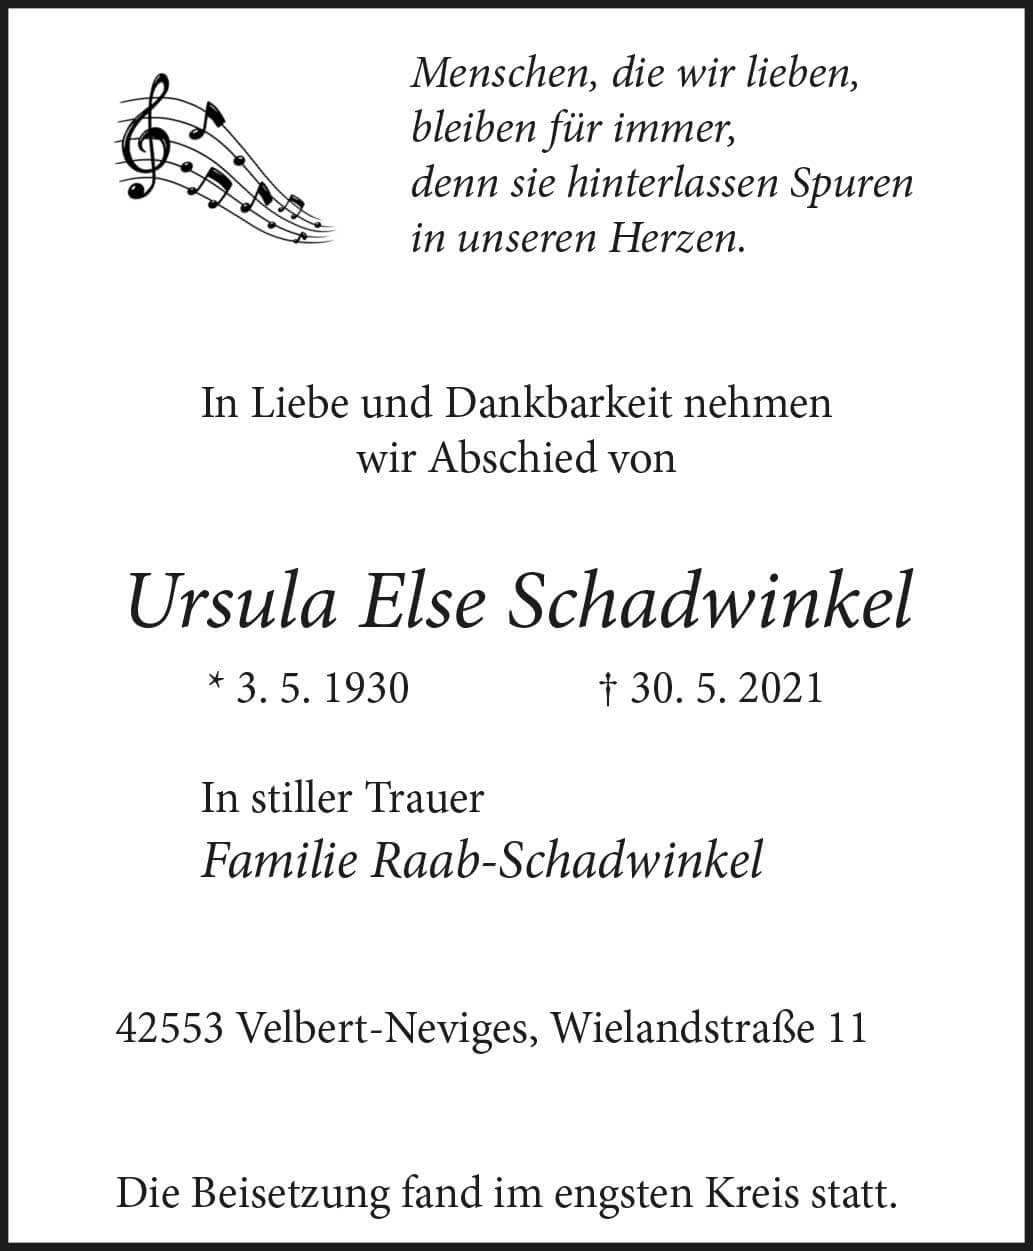 Ursula Else Schadwinkel † 30. 5. 2021